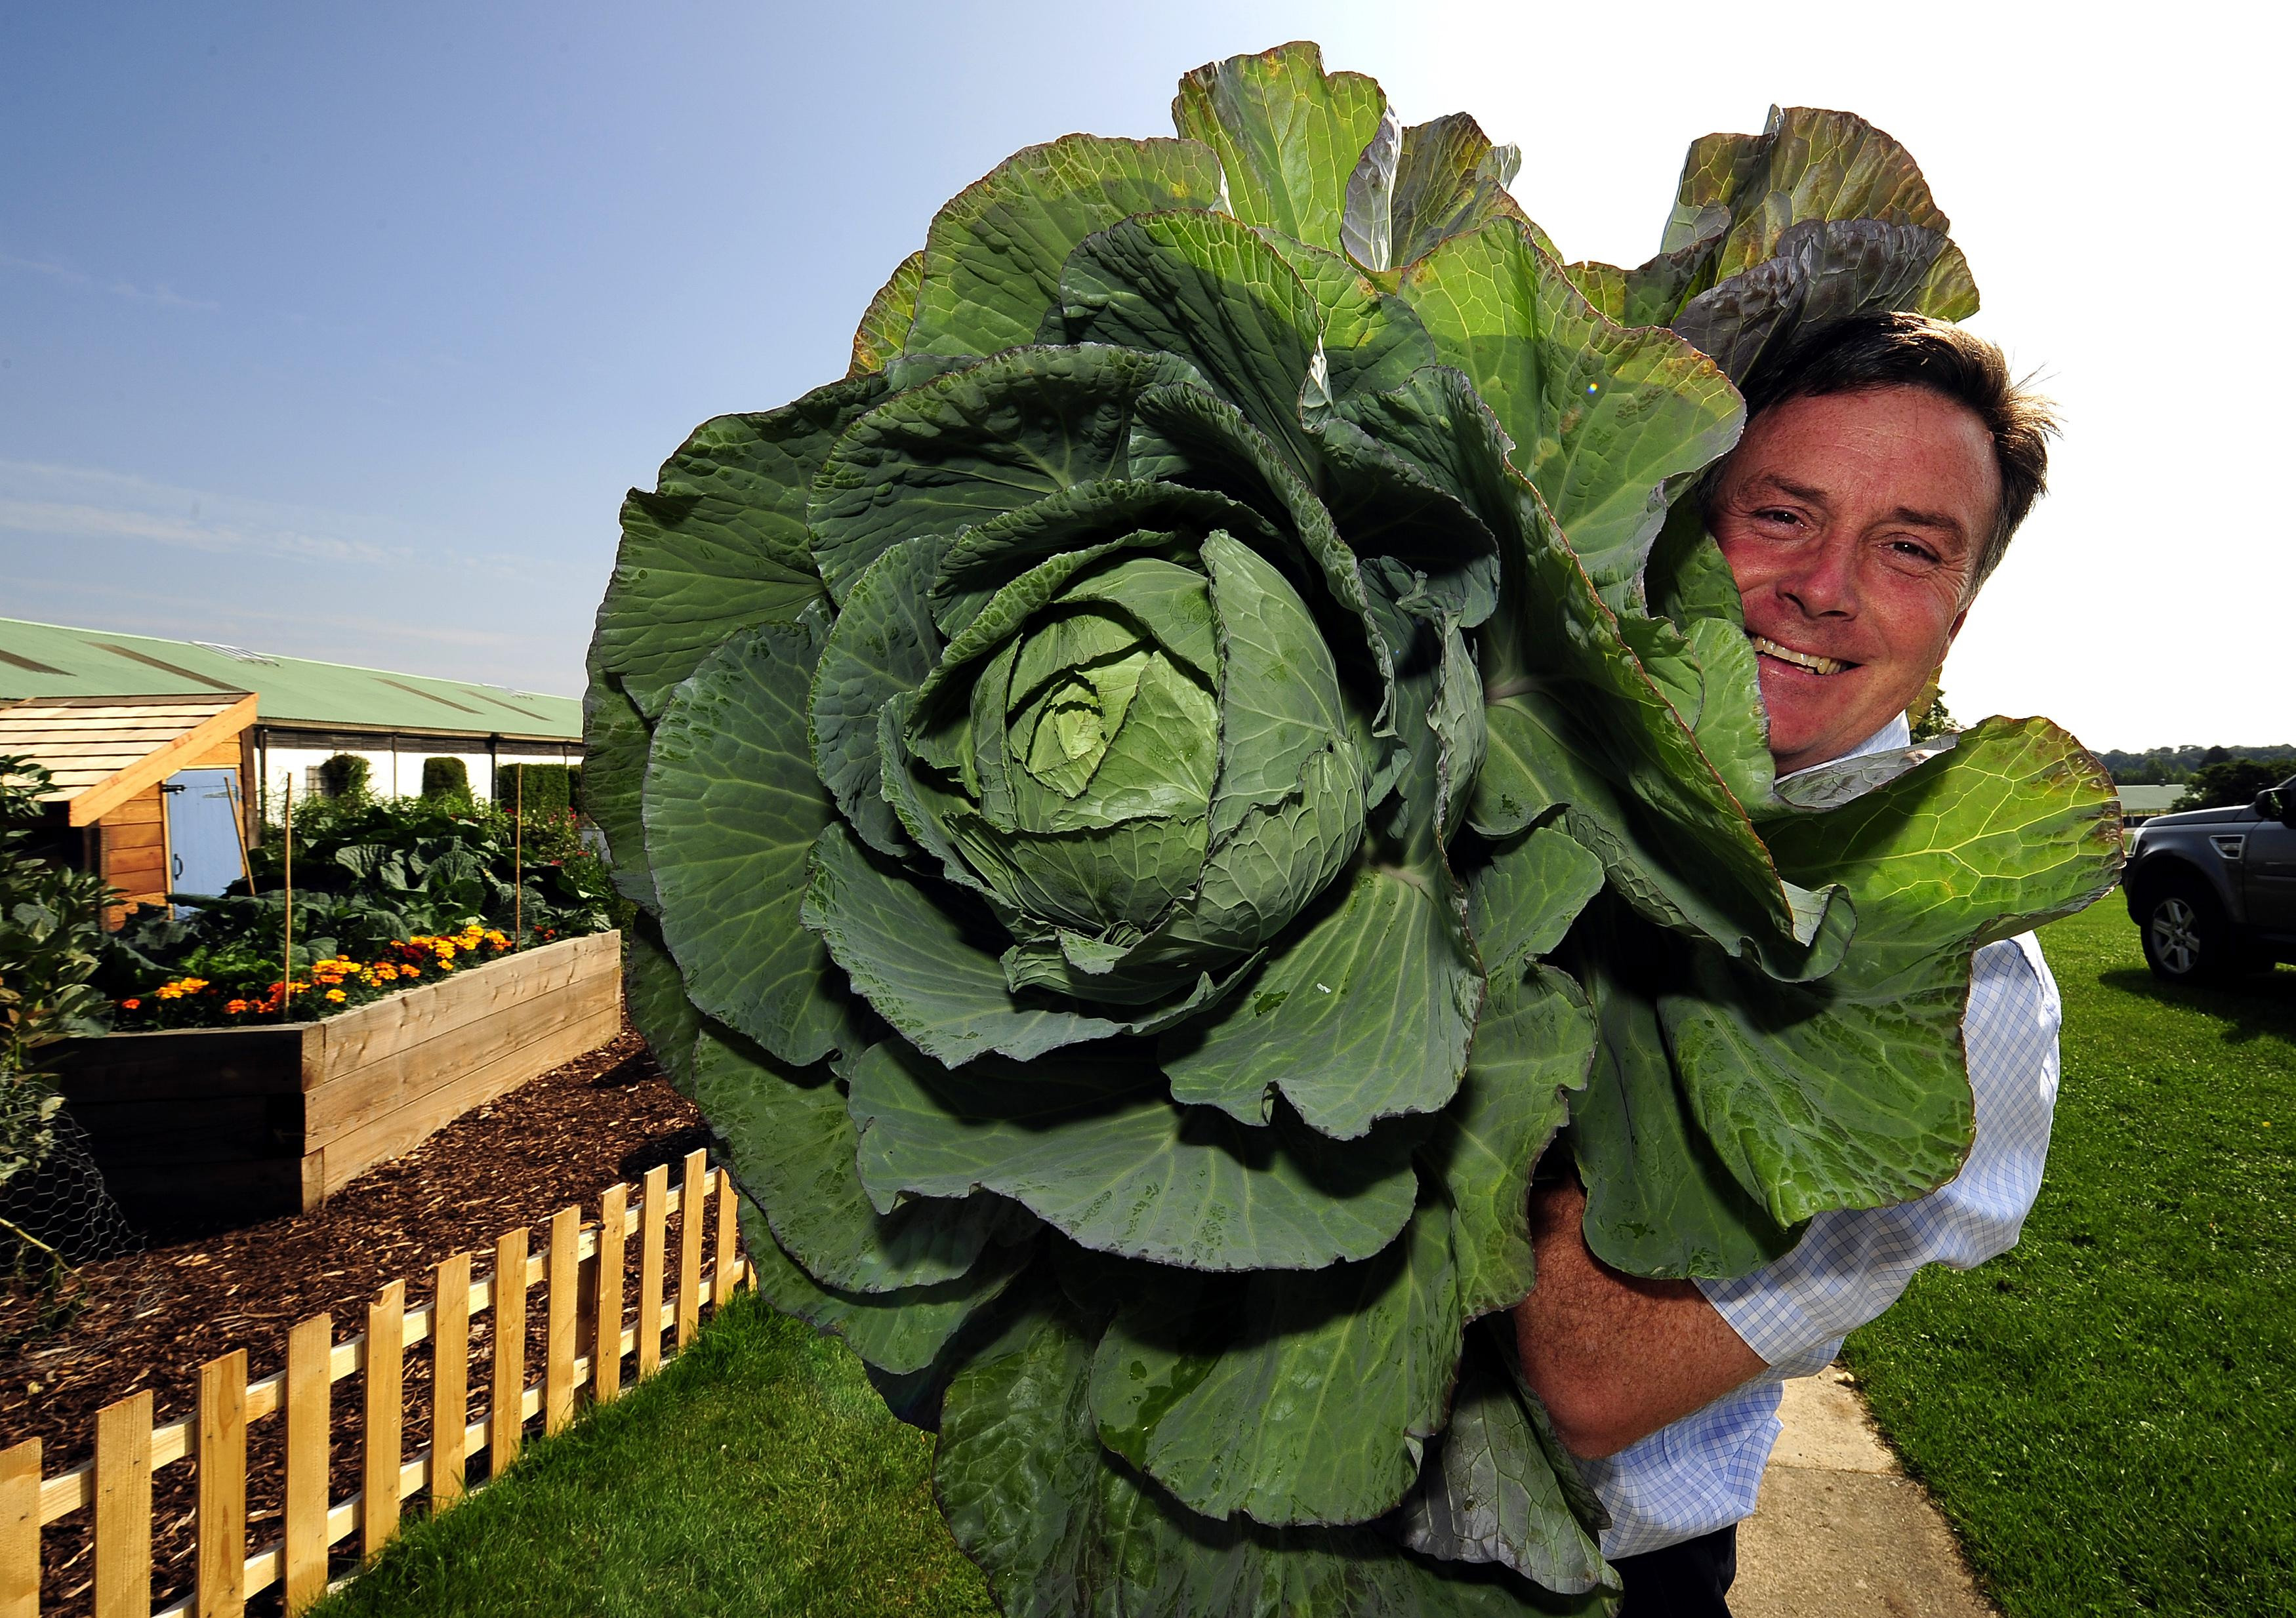 A giant cabbage (John Giles/PA)